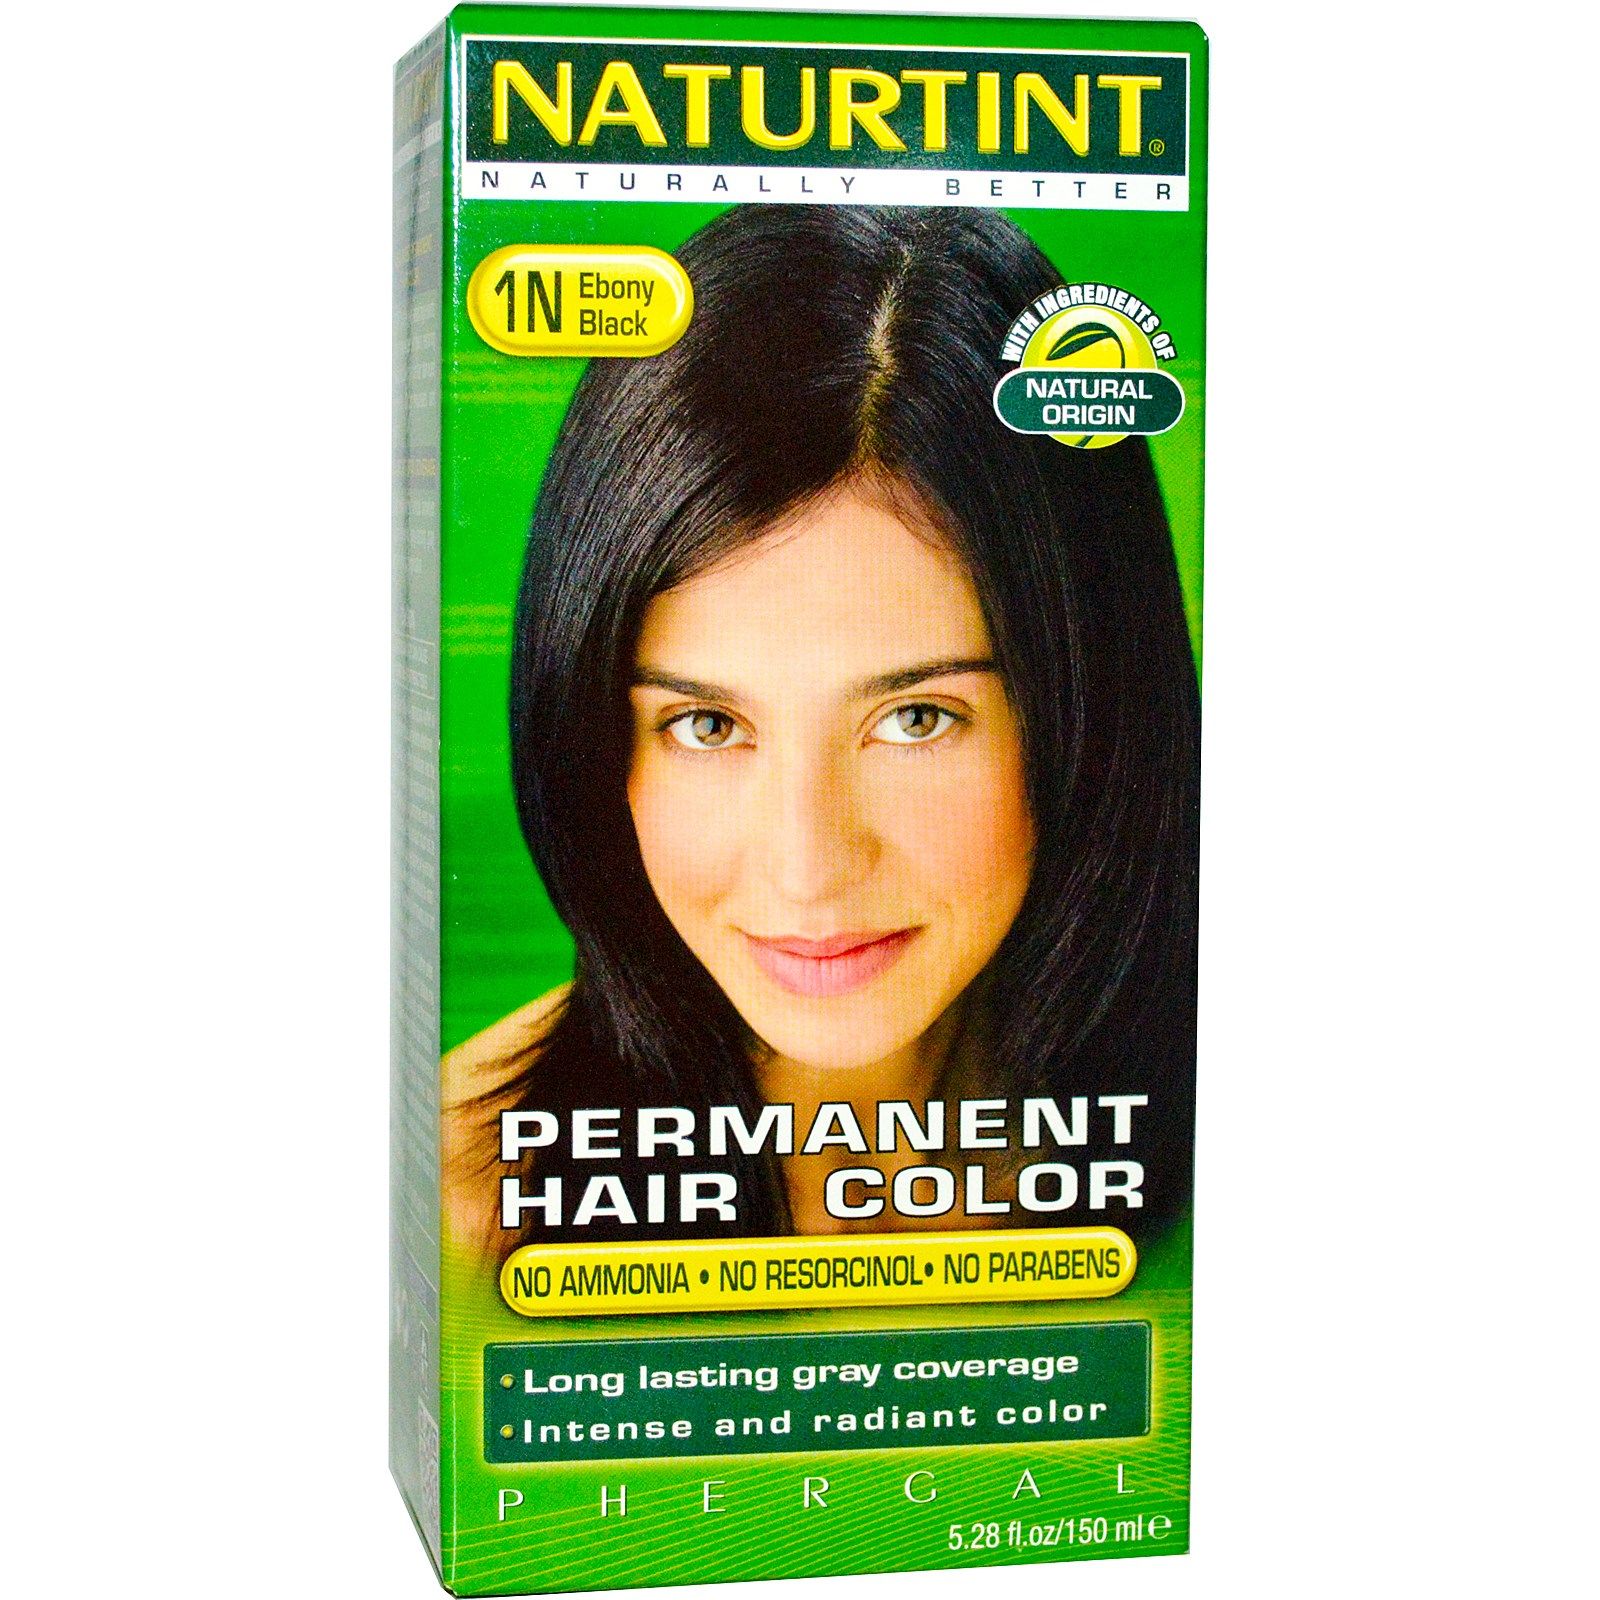 Garnier Semi Permanent Hair Color Chart